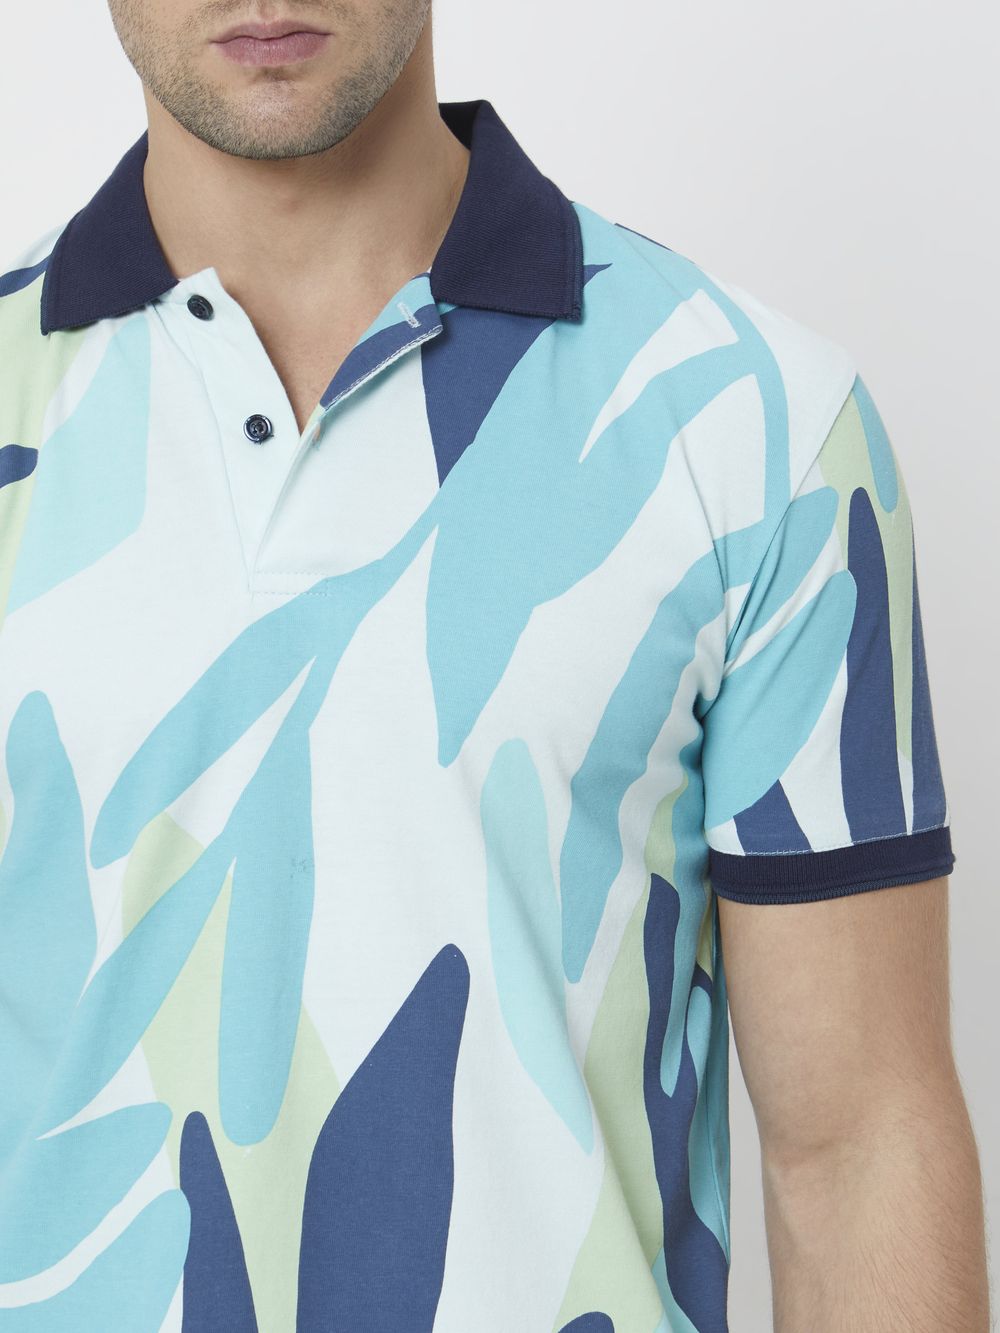 Turquoise Leaf Print Slim Fit Polo T-Shirt